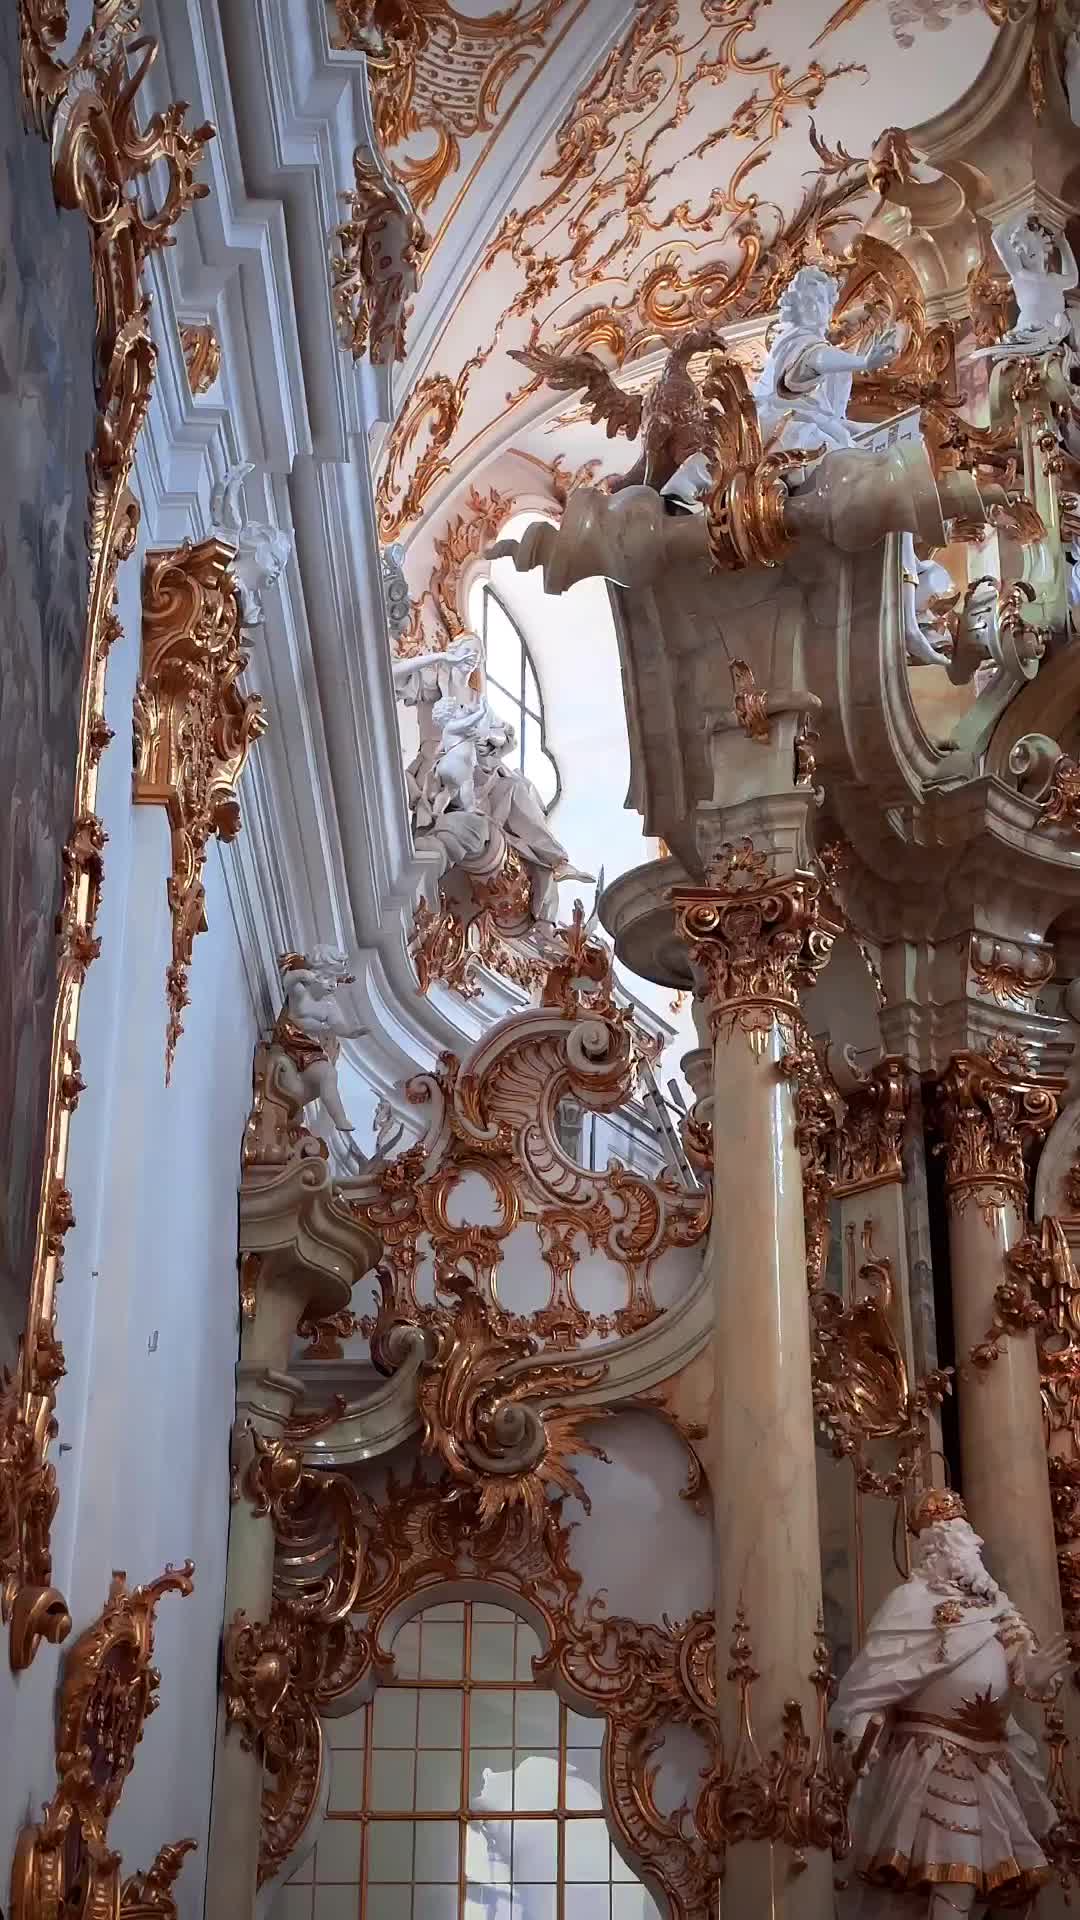 ✨ lost in ornament 🫠
📍this unique artwork was designed by sculptor Simon Sorg and realized between 1769- 1775 at Alte Kapelle, Regensburg. 

#baroqueblockbuster #rococo #regensburg #unesco #art #culture #luxury #luxurylifestyle